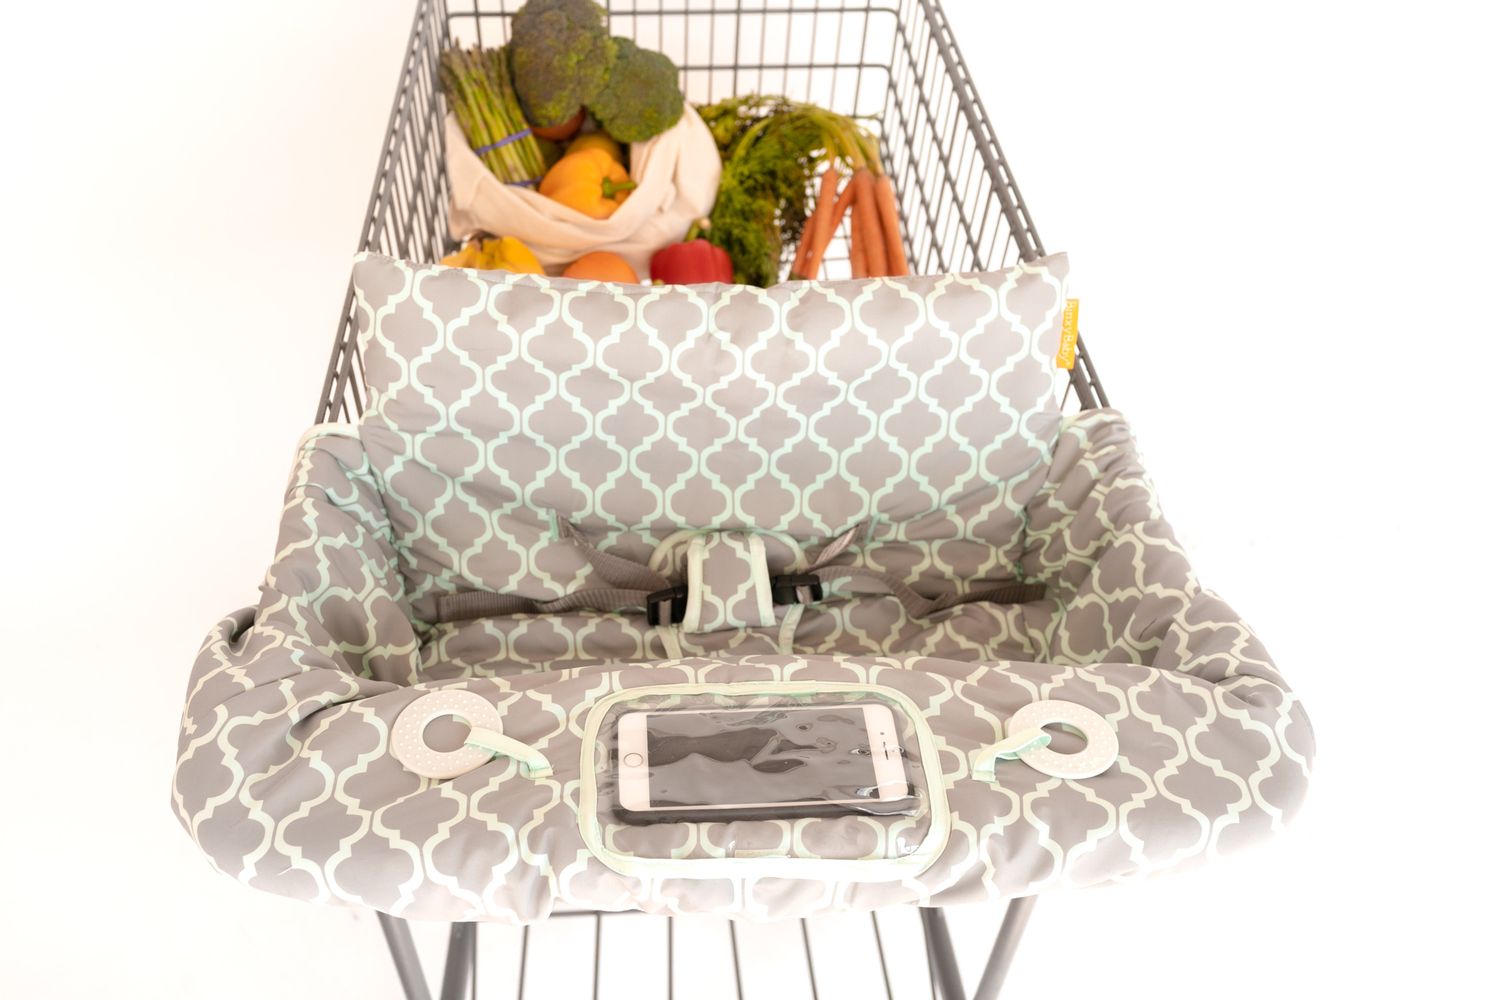 MCHPI Store Baby Shopping Cart Cover - Grey/Aqua